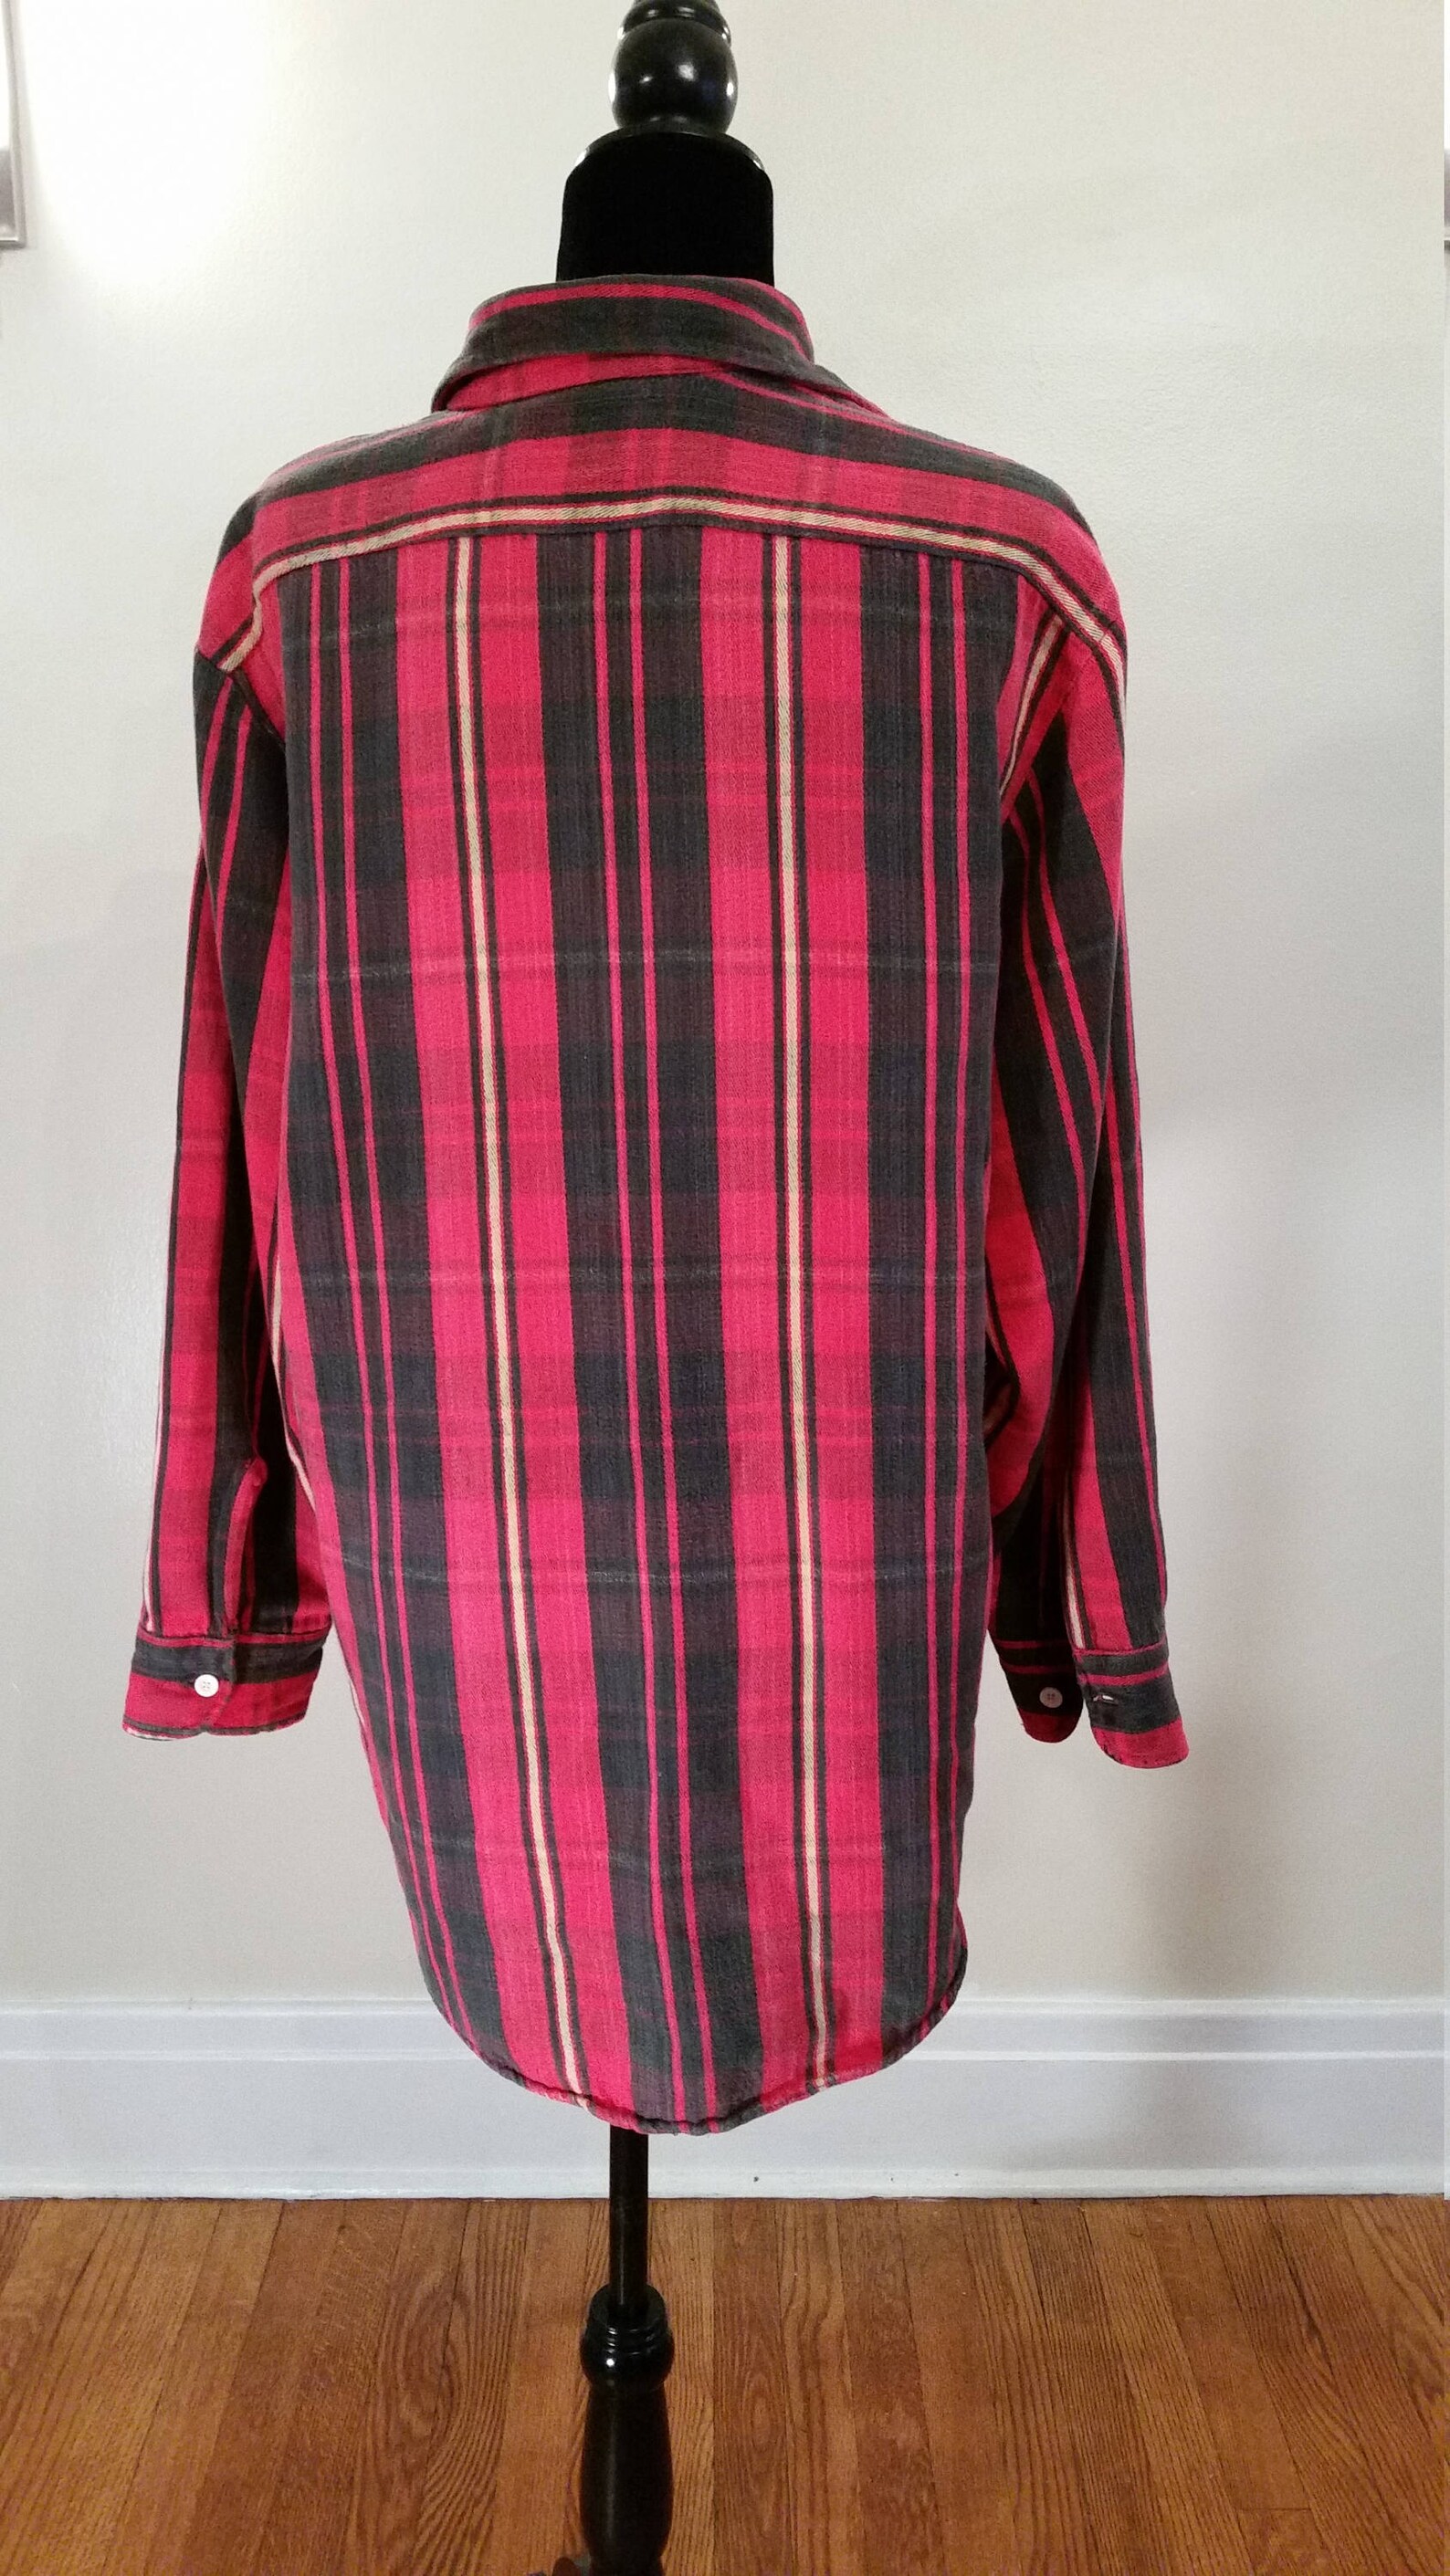 Lumberjack shirt red plaid shirt plaid button up red flannel | Etsy